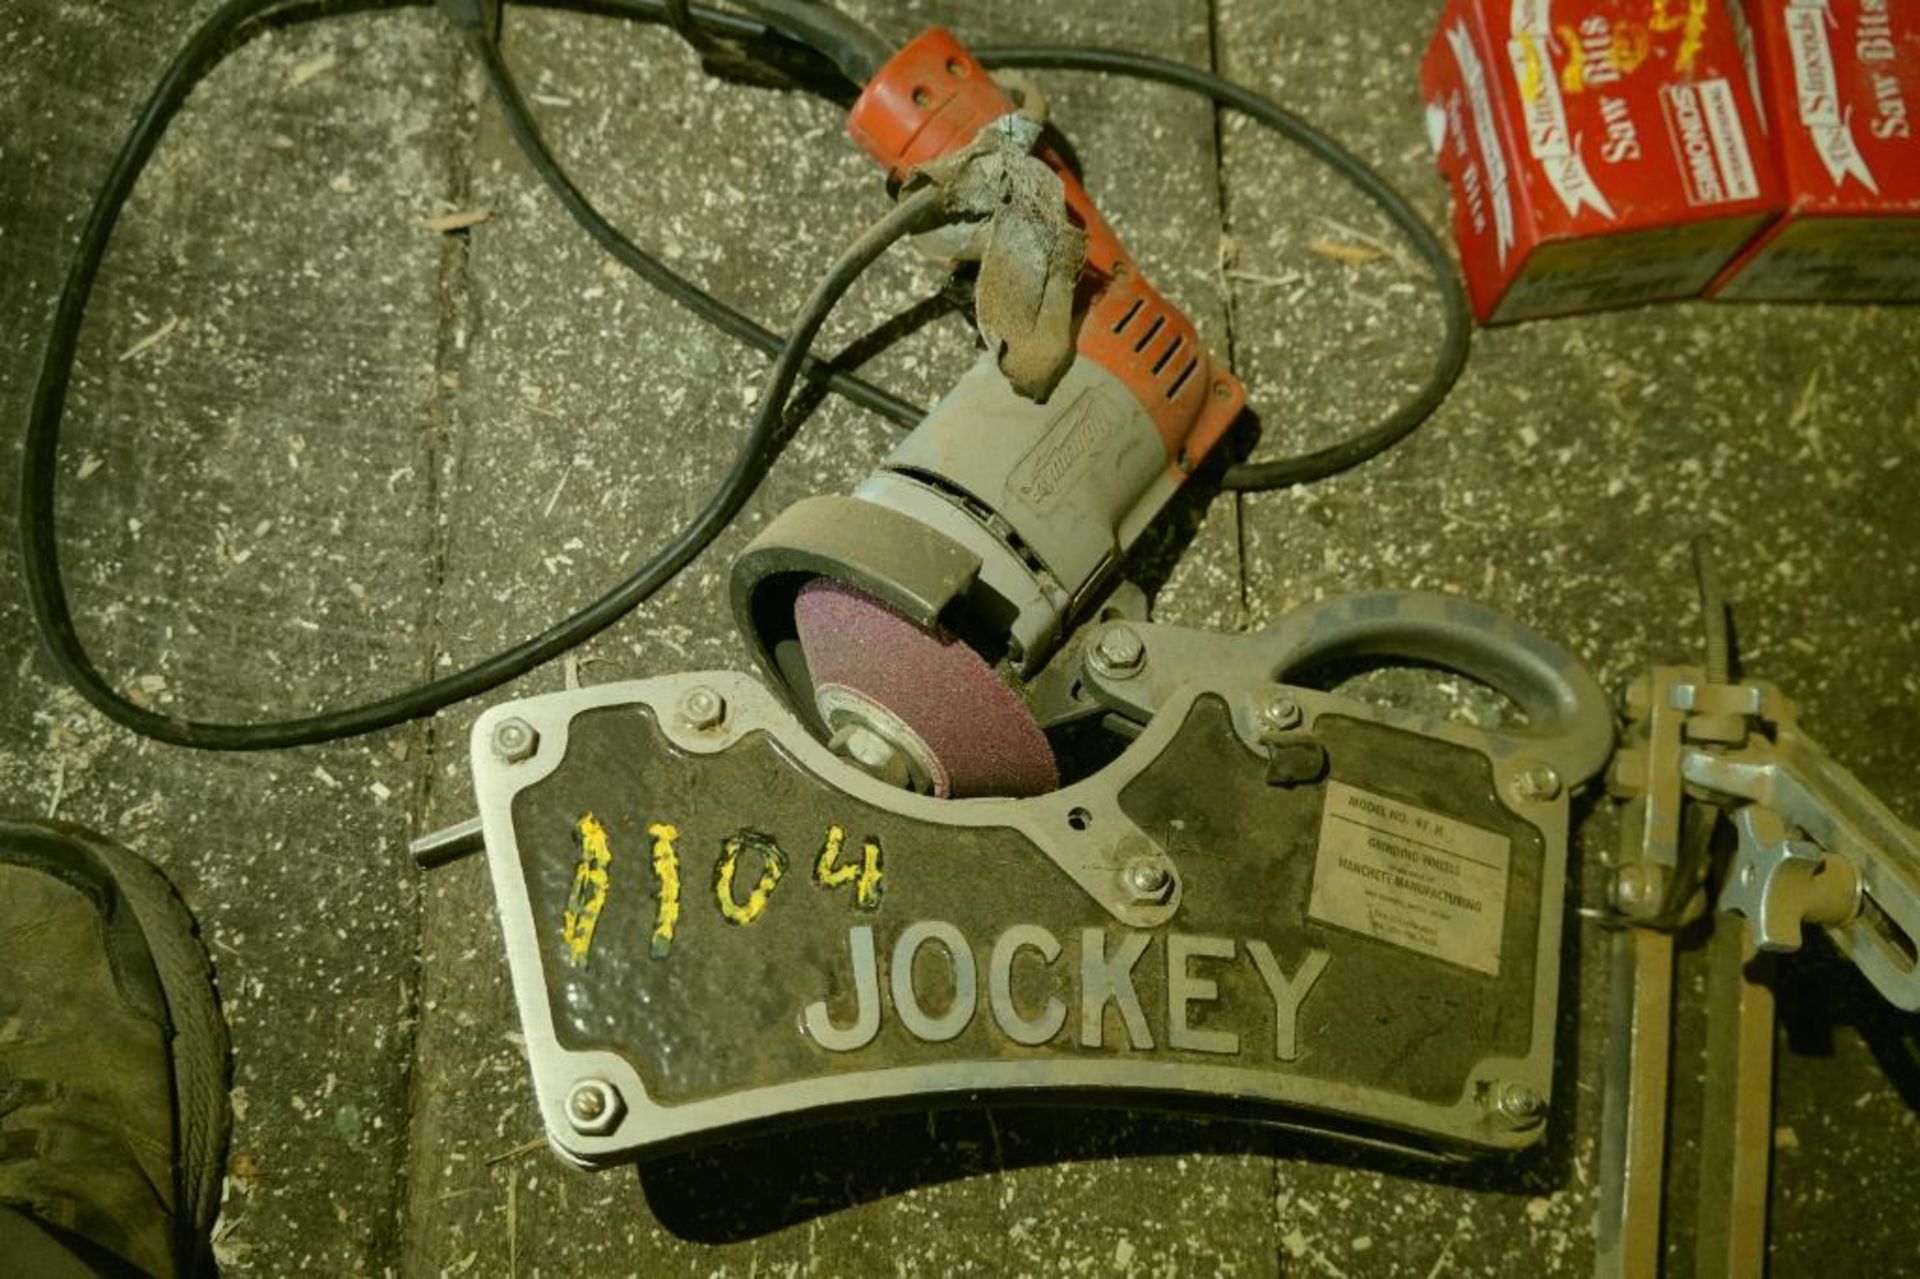 Jockey Grinder and Tools - Image 11 of 15